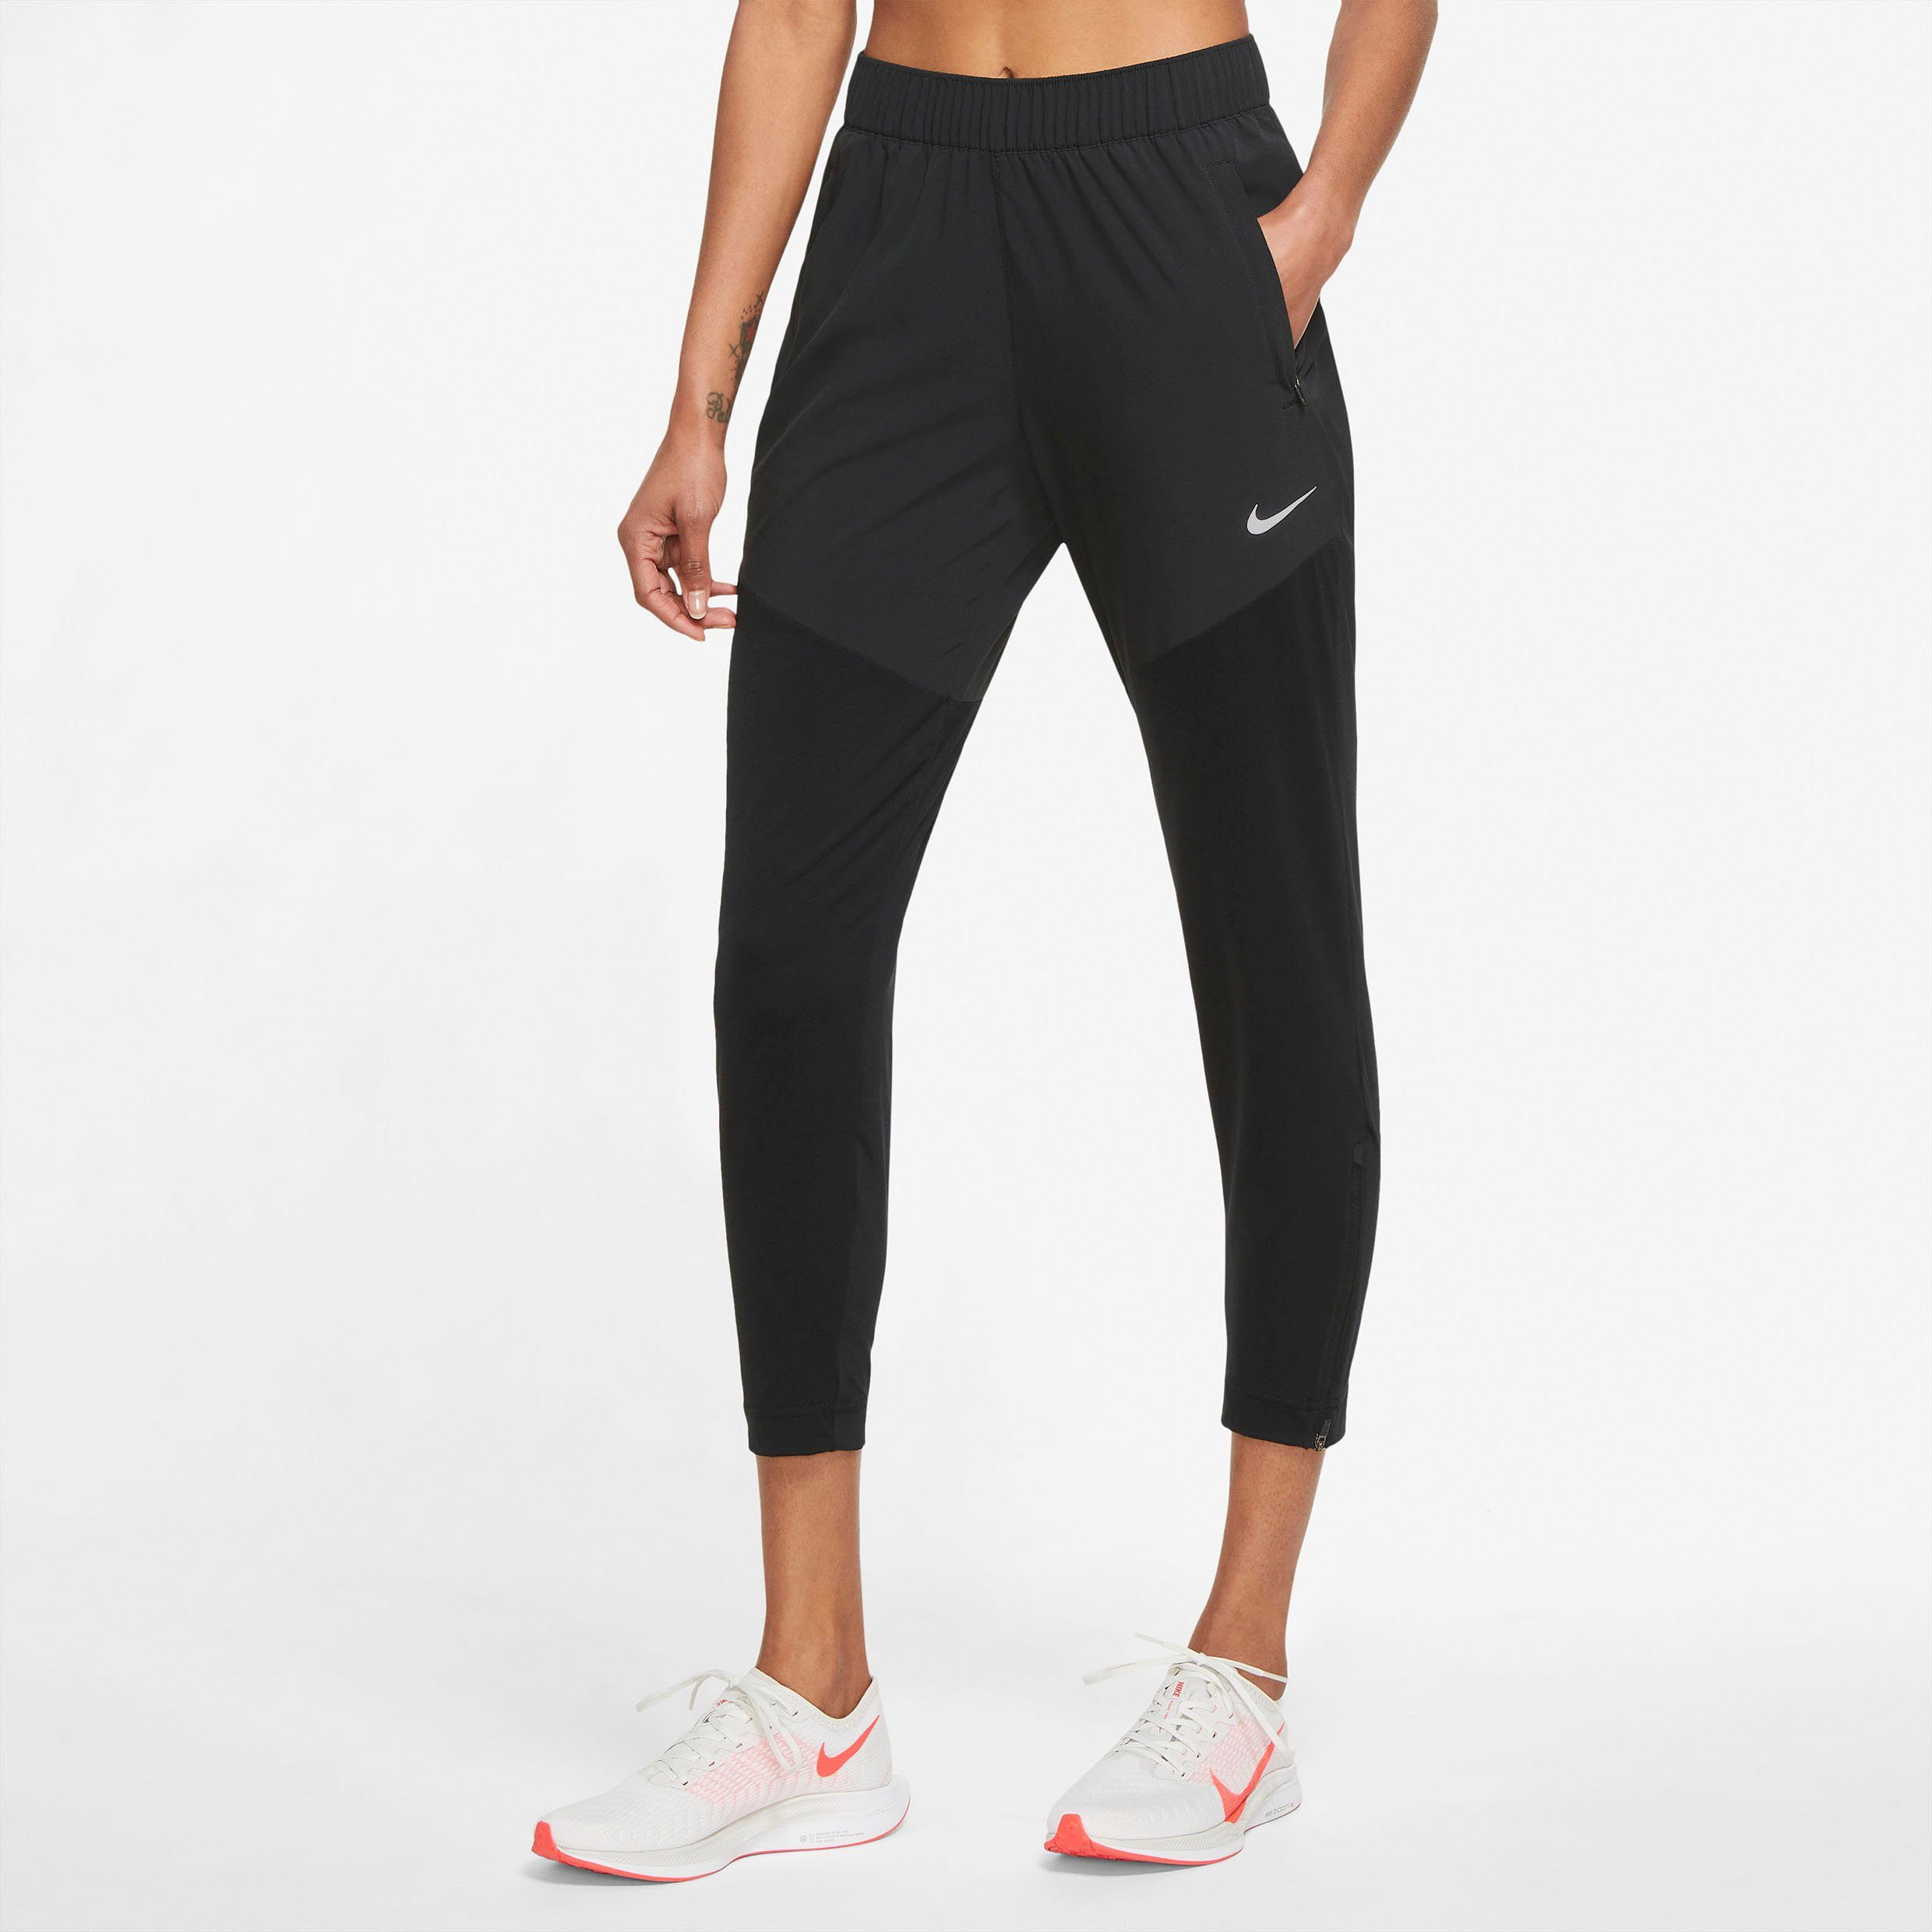 Nike Laufhosen Damen online kaufen | OTTO